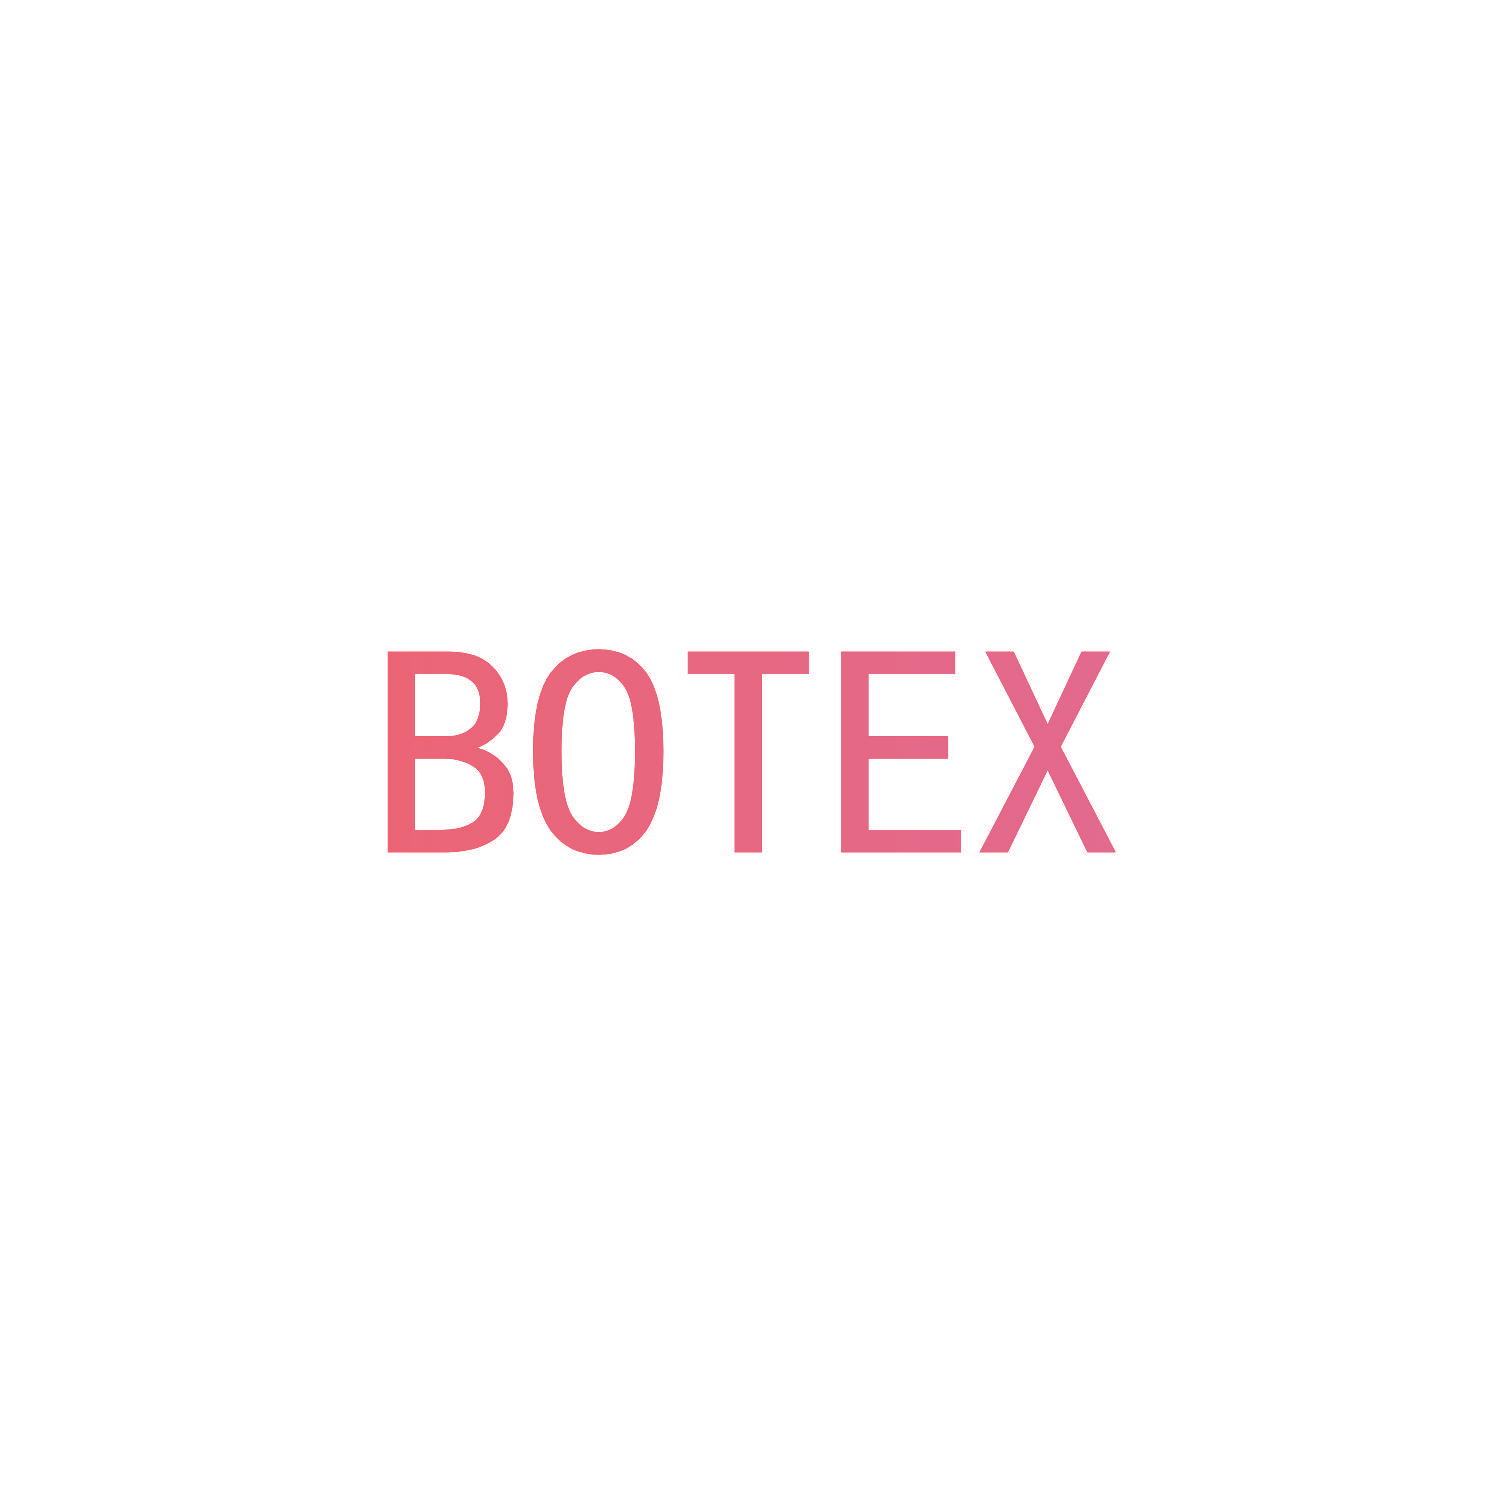 BOTEX